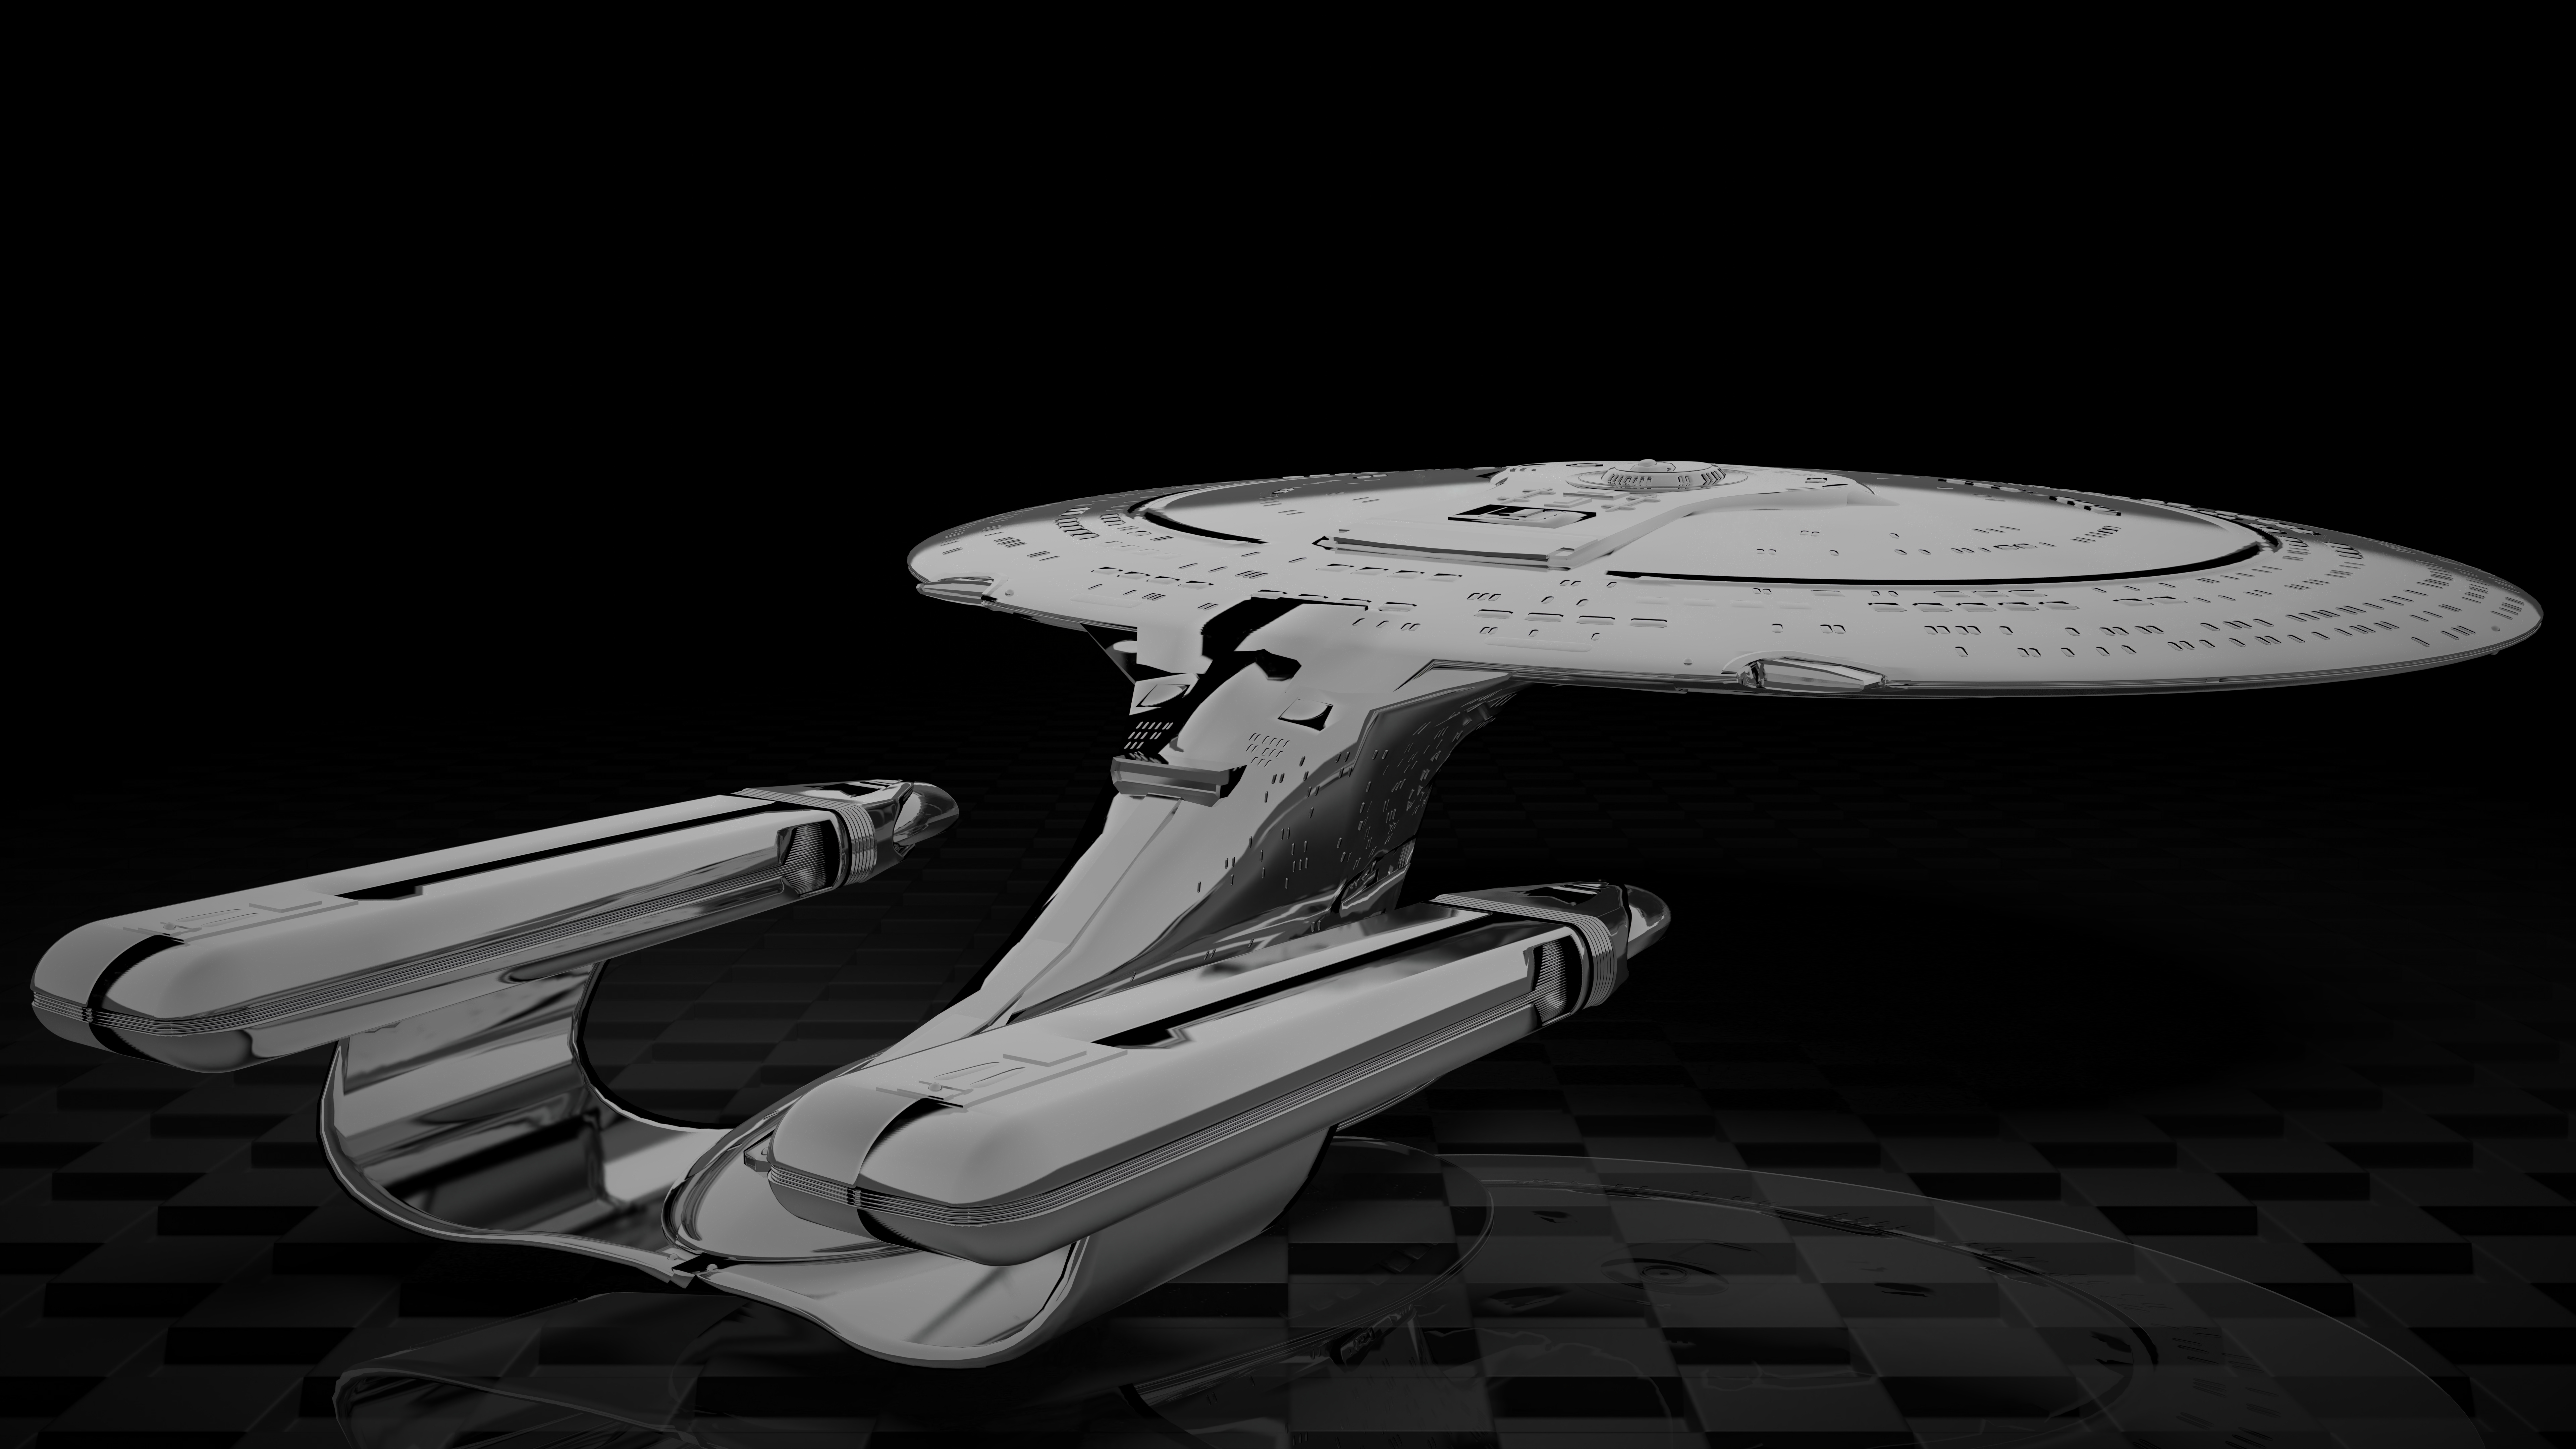 General 7680x4320 Star Trek Ships CGI Star Trek spaceship